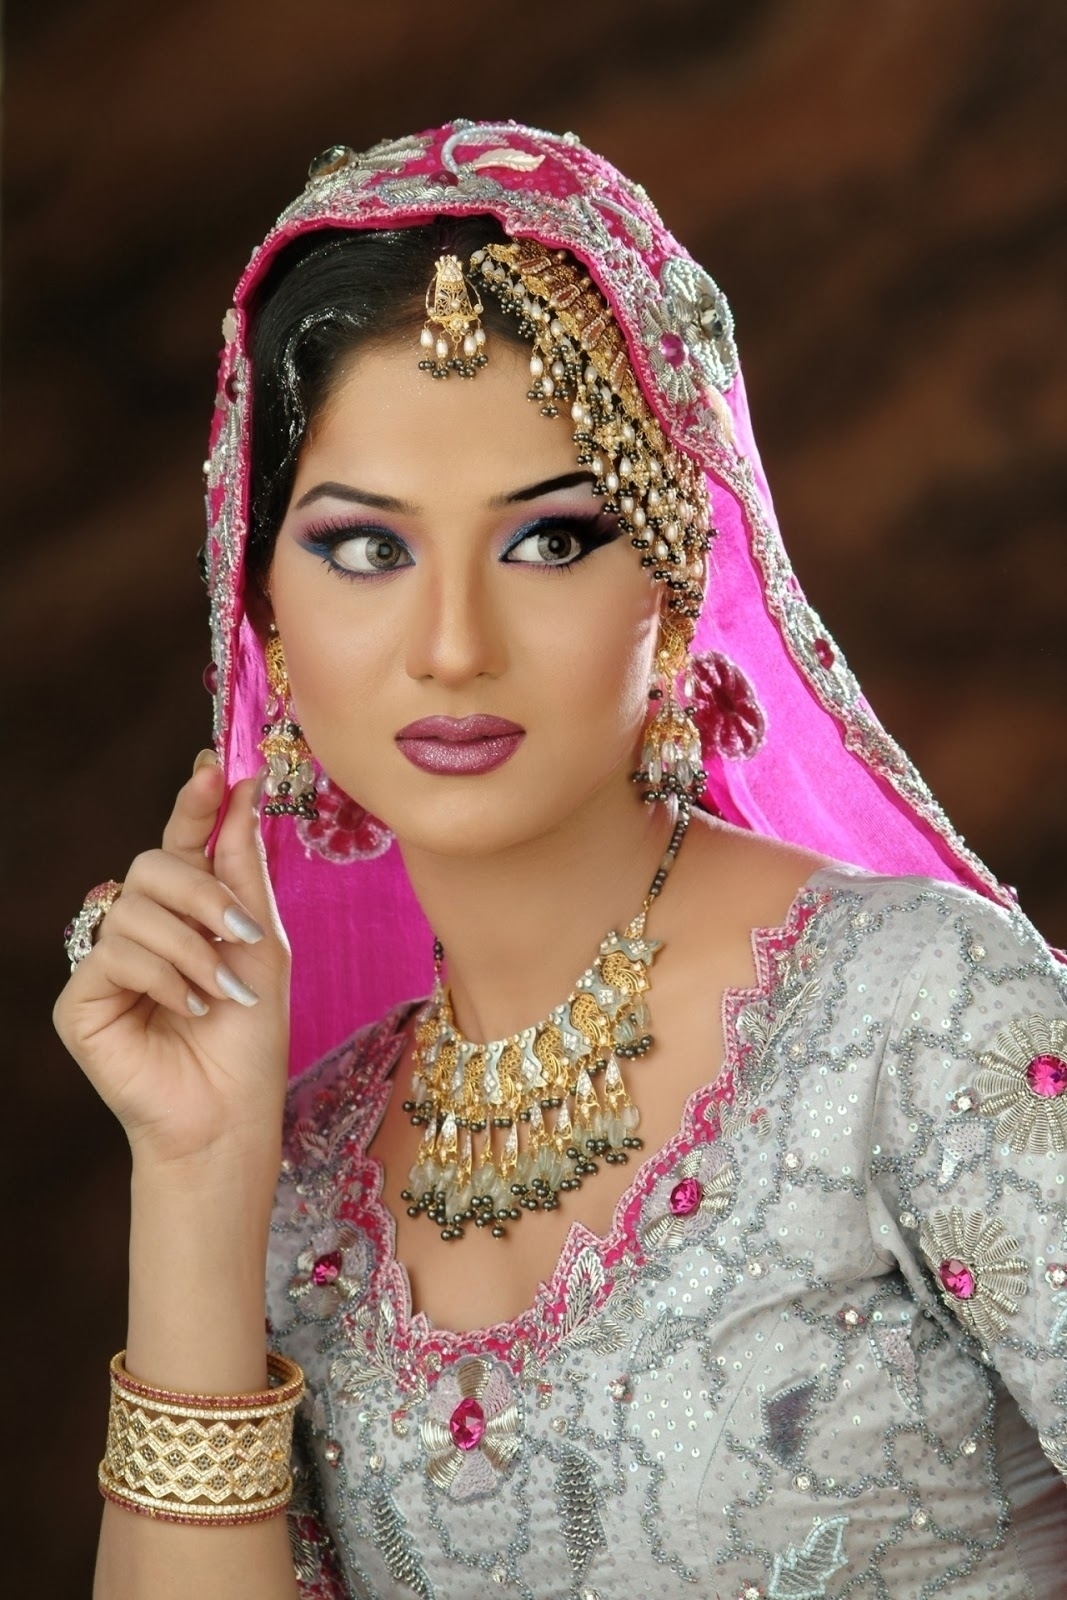 Indian Bridal Makeup Pictures 2013 – Wavy Haircut throughout Bridal Makeup Pics 2013